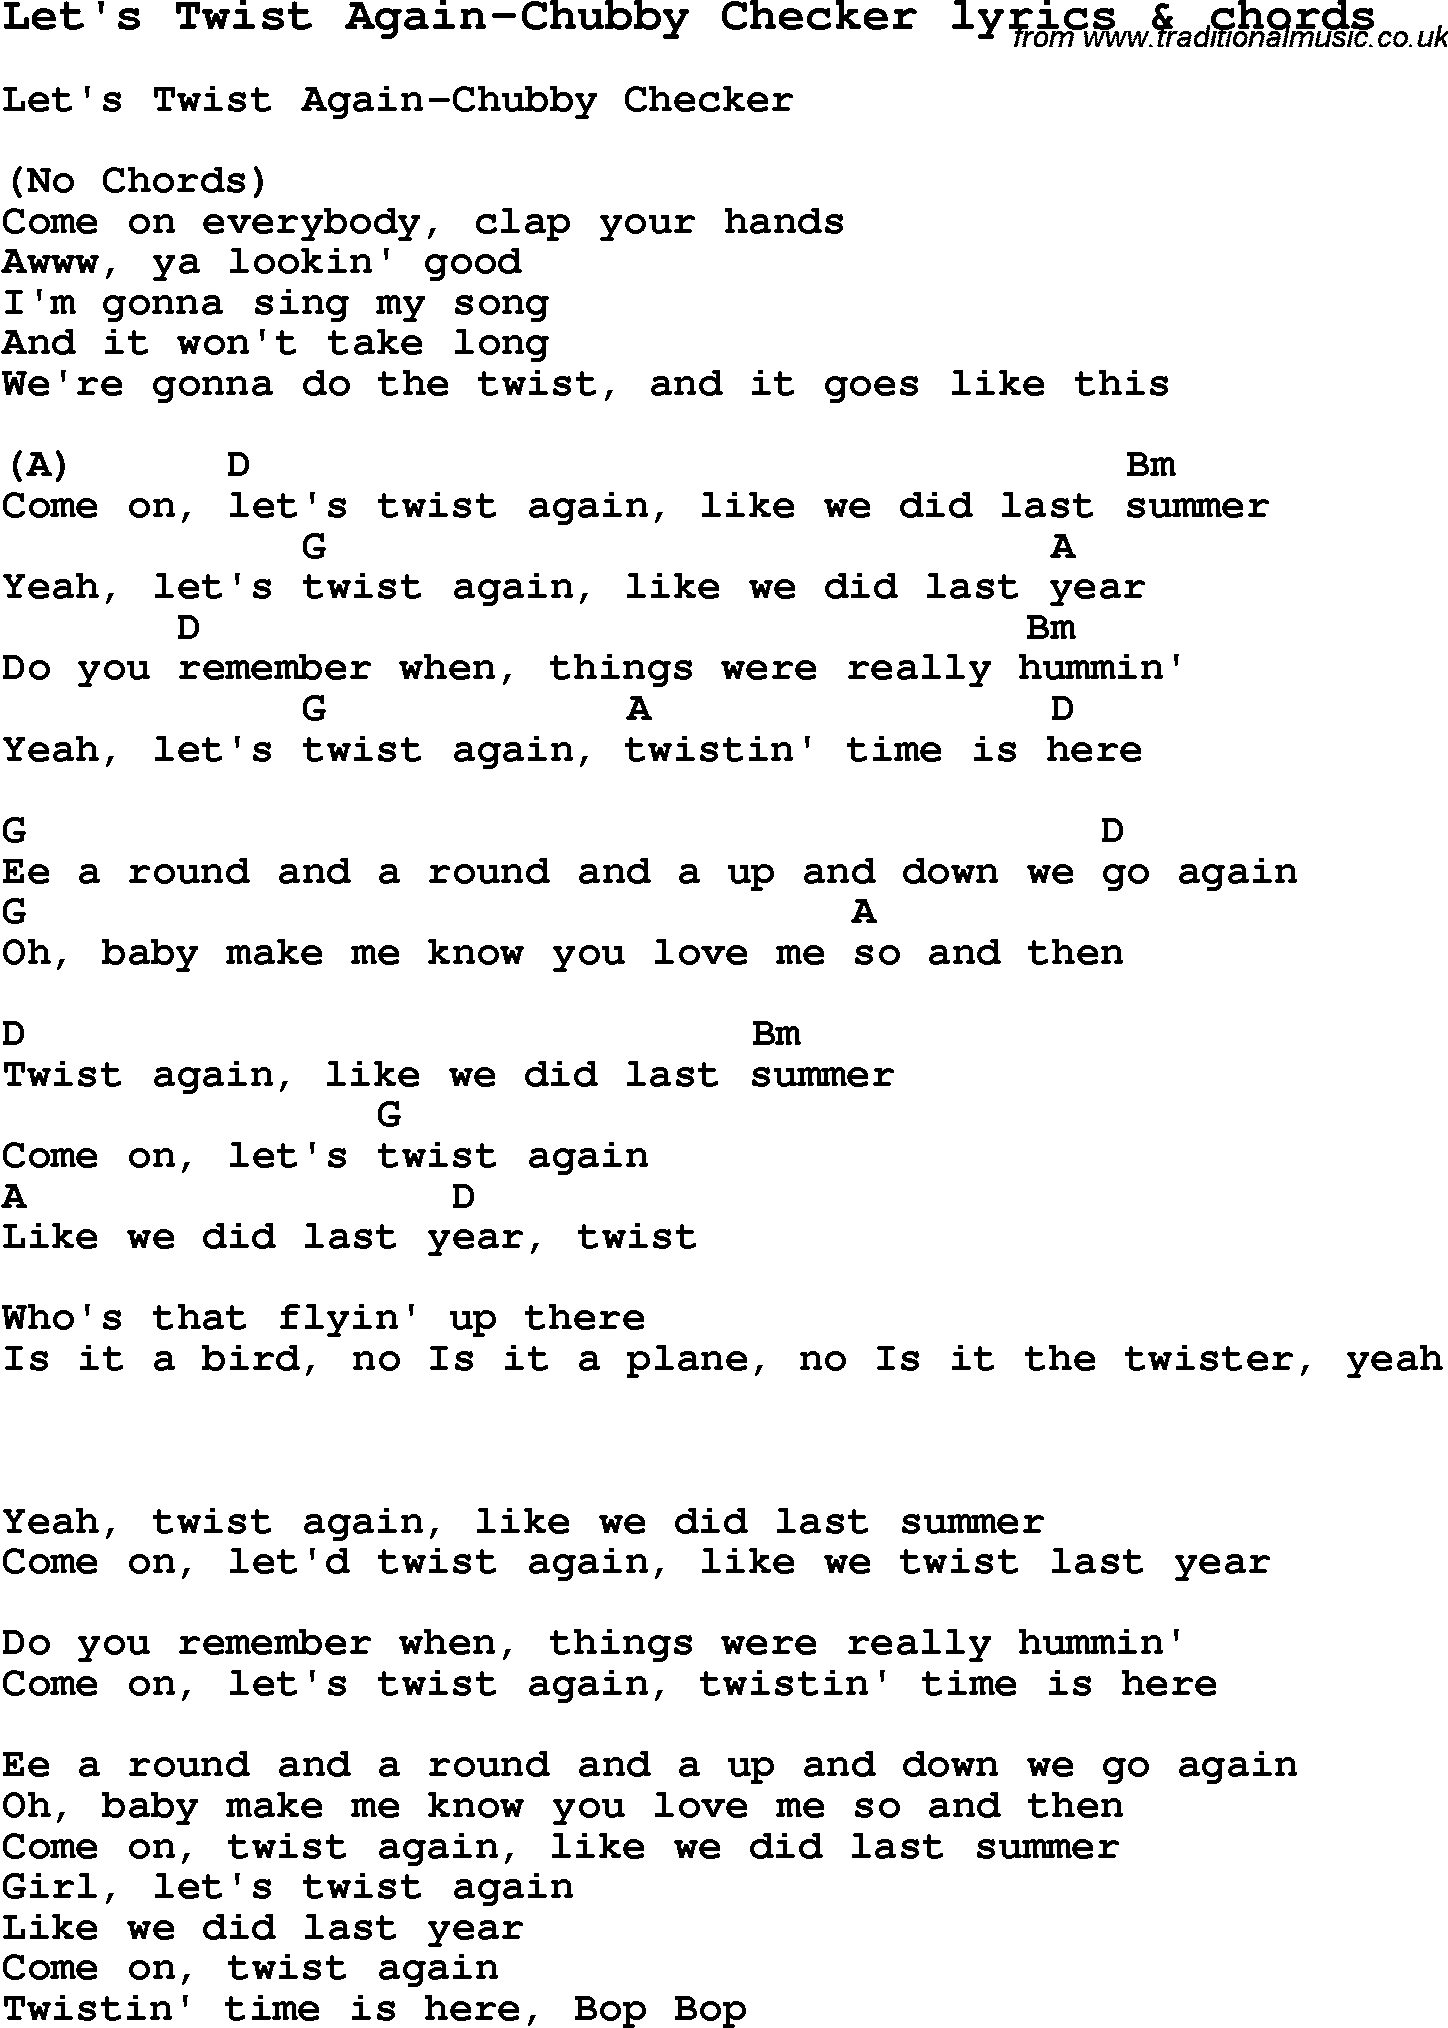 Lumberjack reccomend Twist again chubby checker lyrics